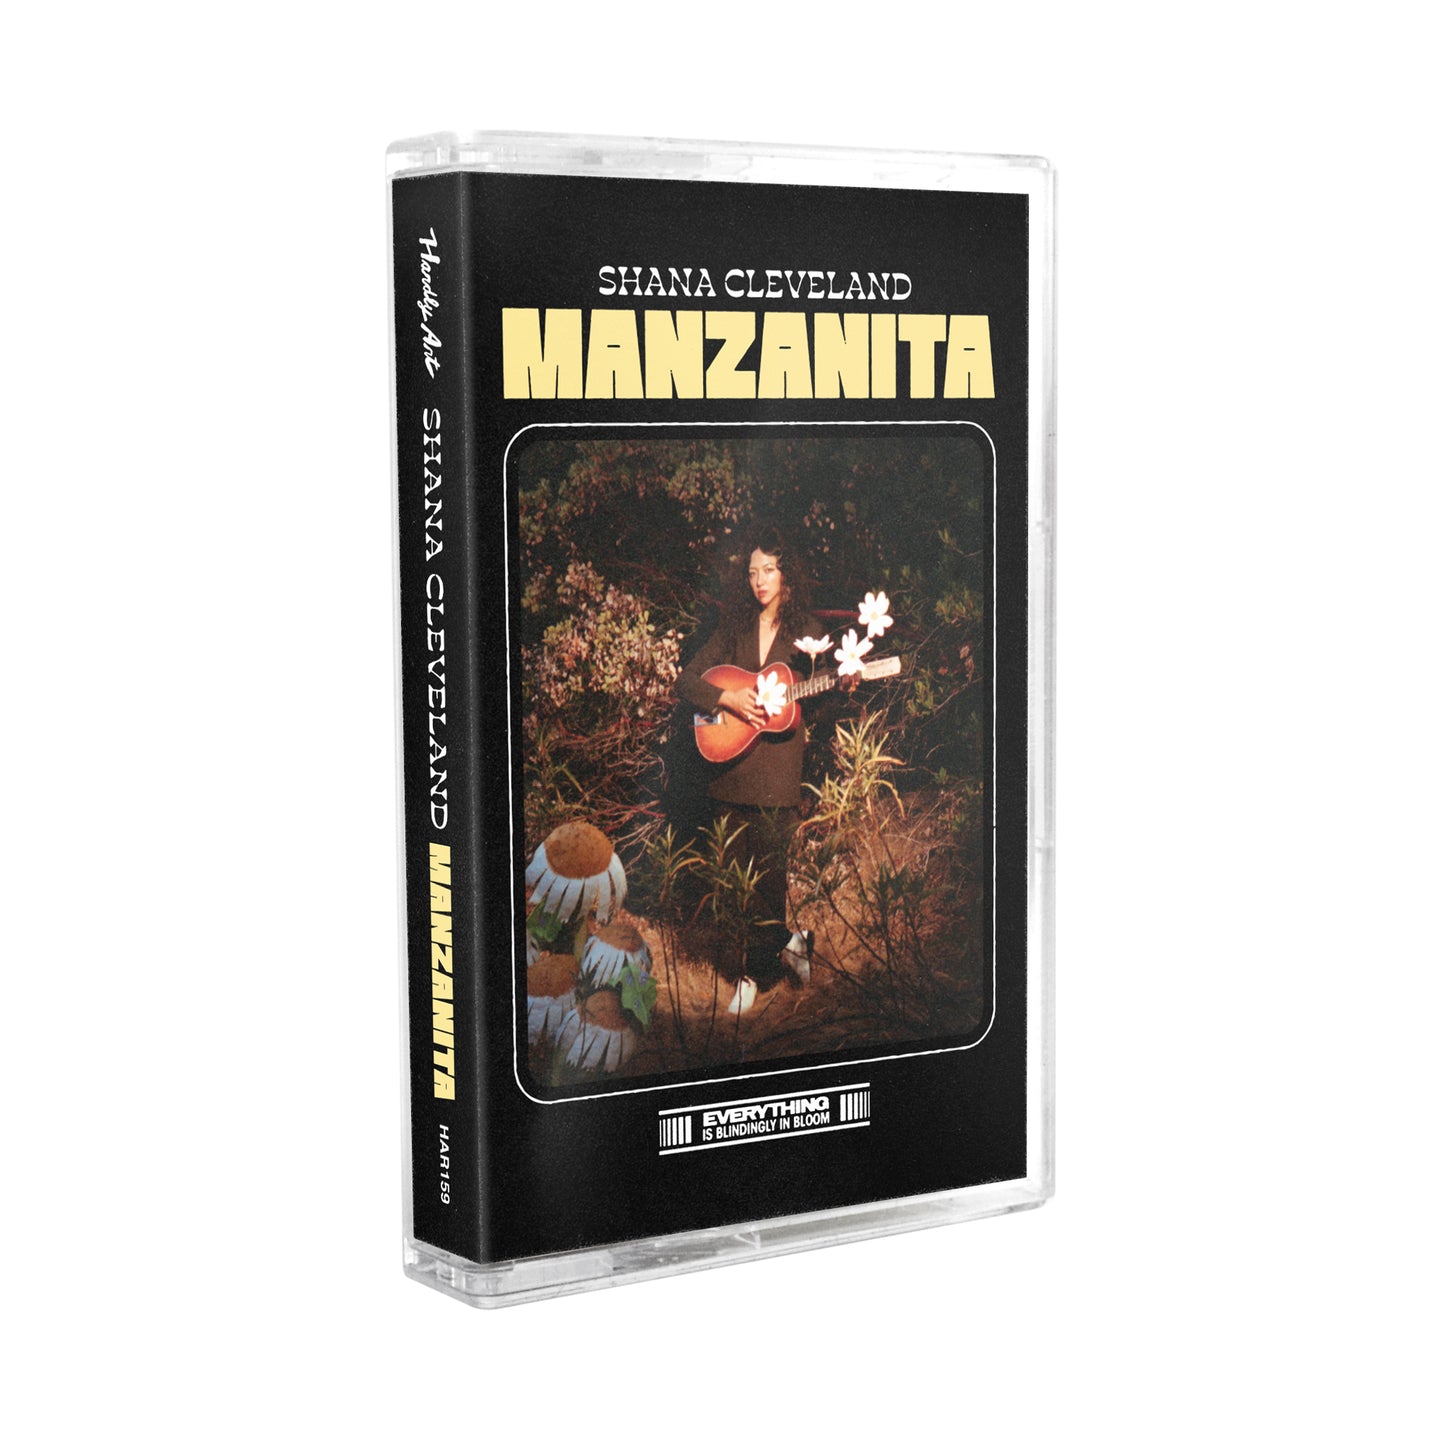 Shana Cleveland "Manzanita" LP/CD/CS